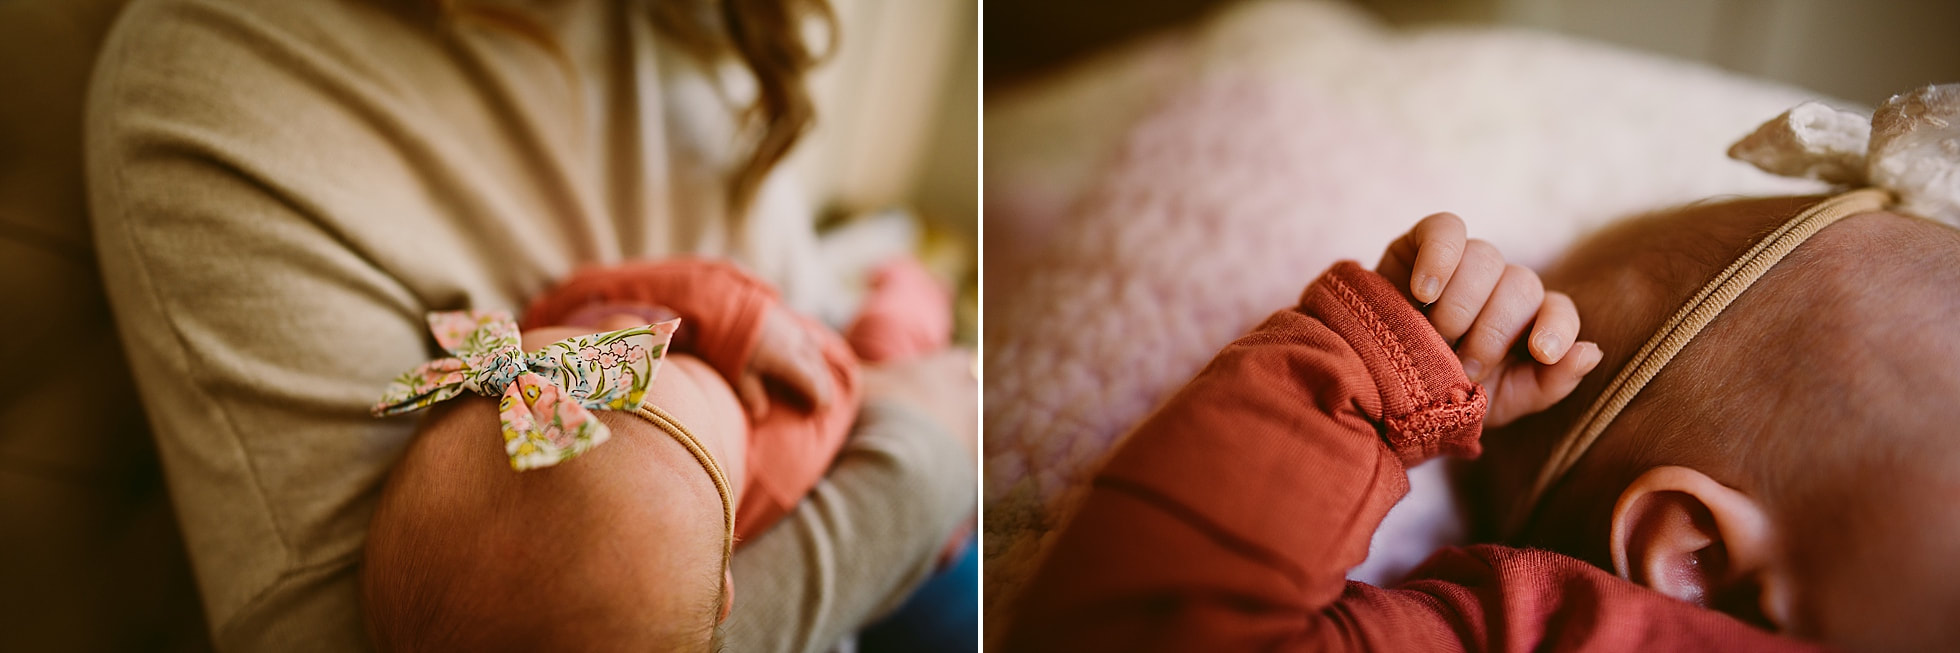 newborn details by charlottesville photographer Laura Richards